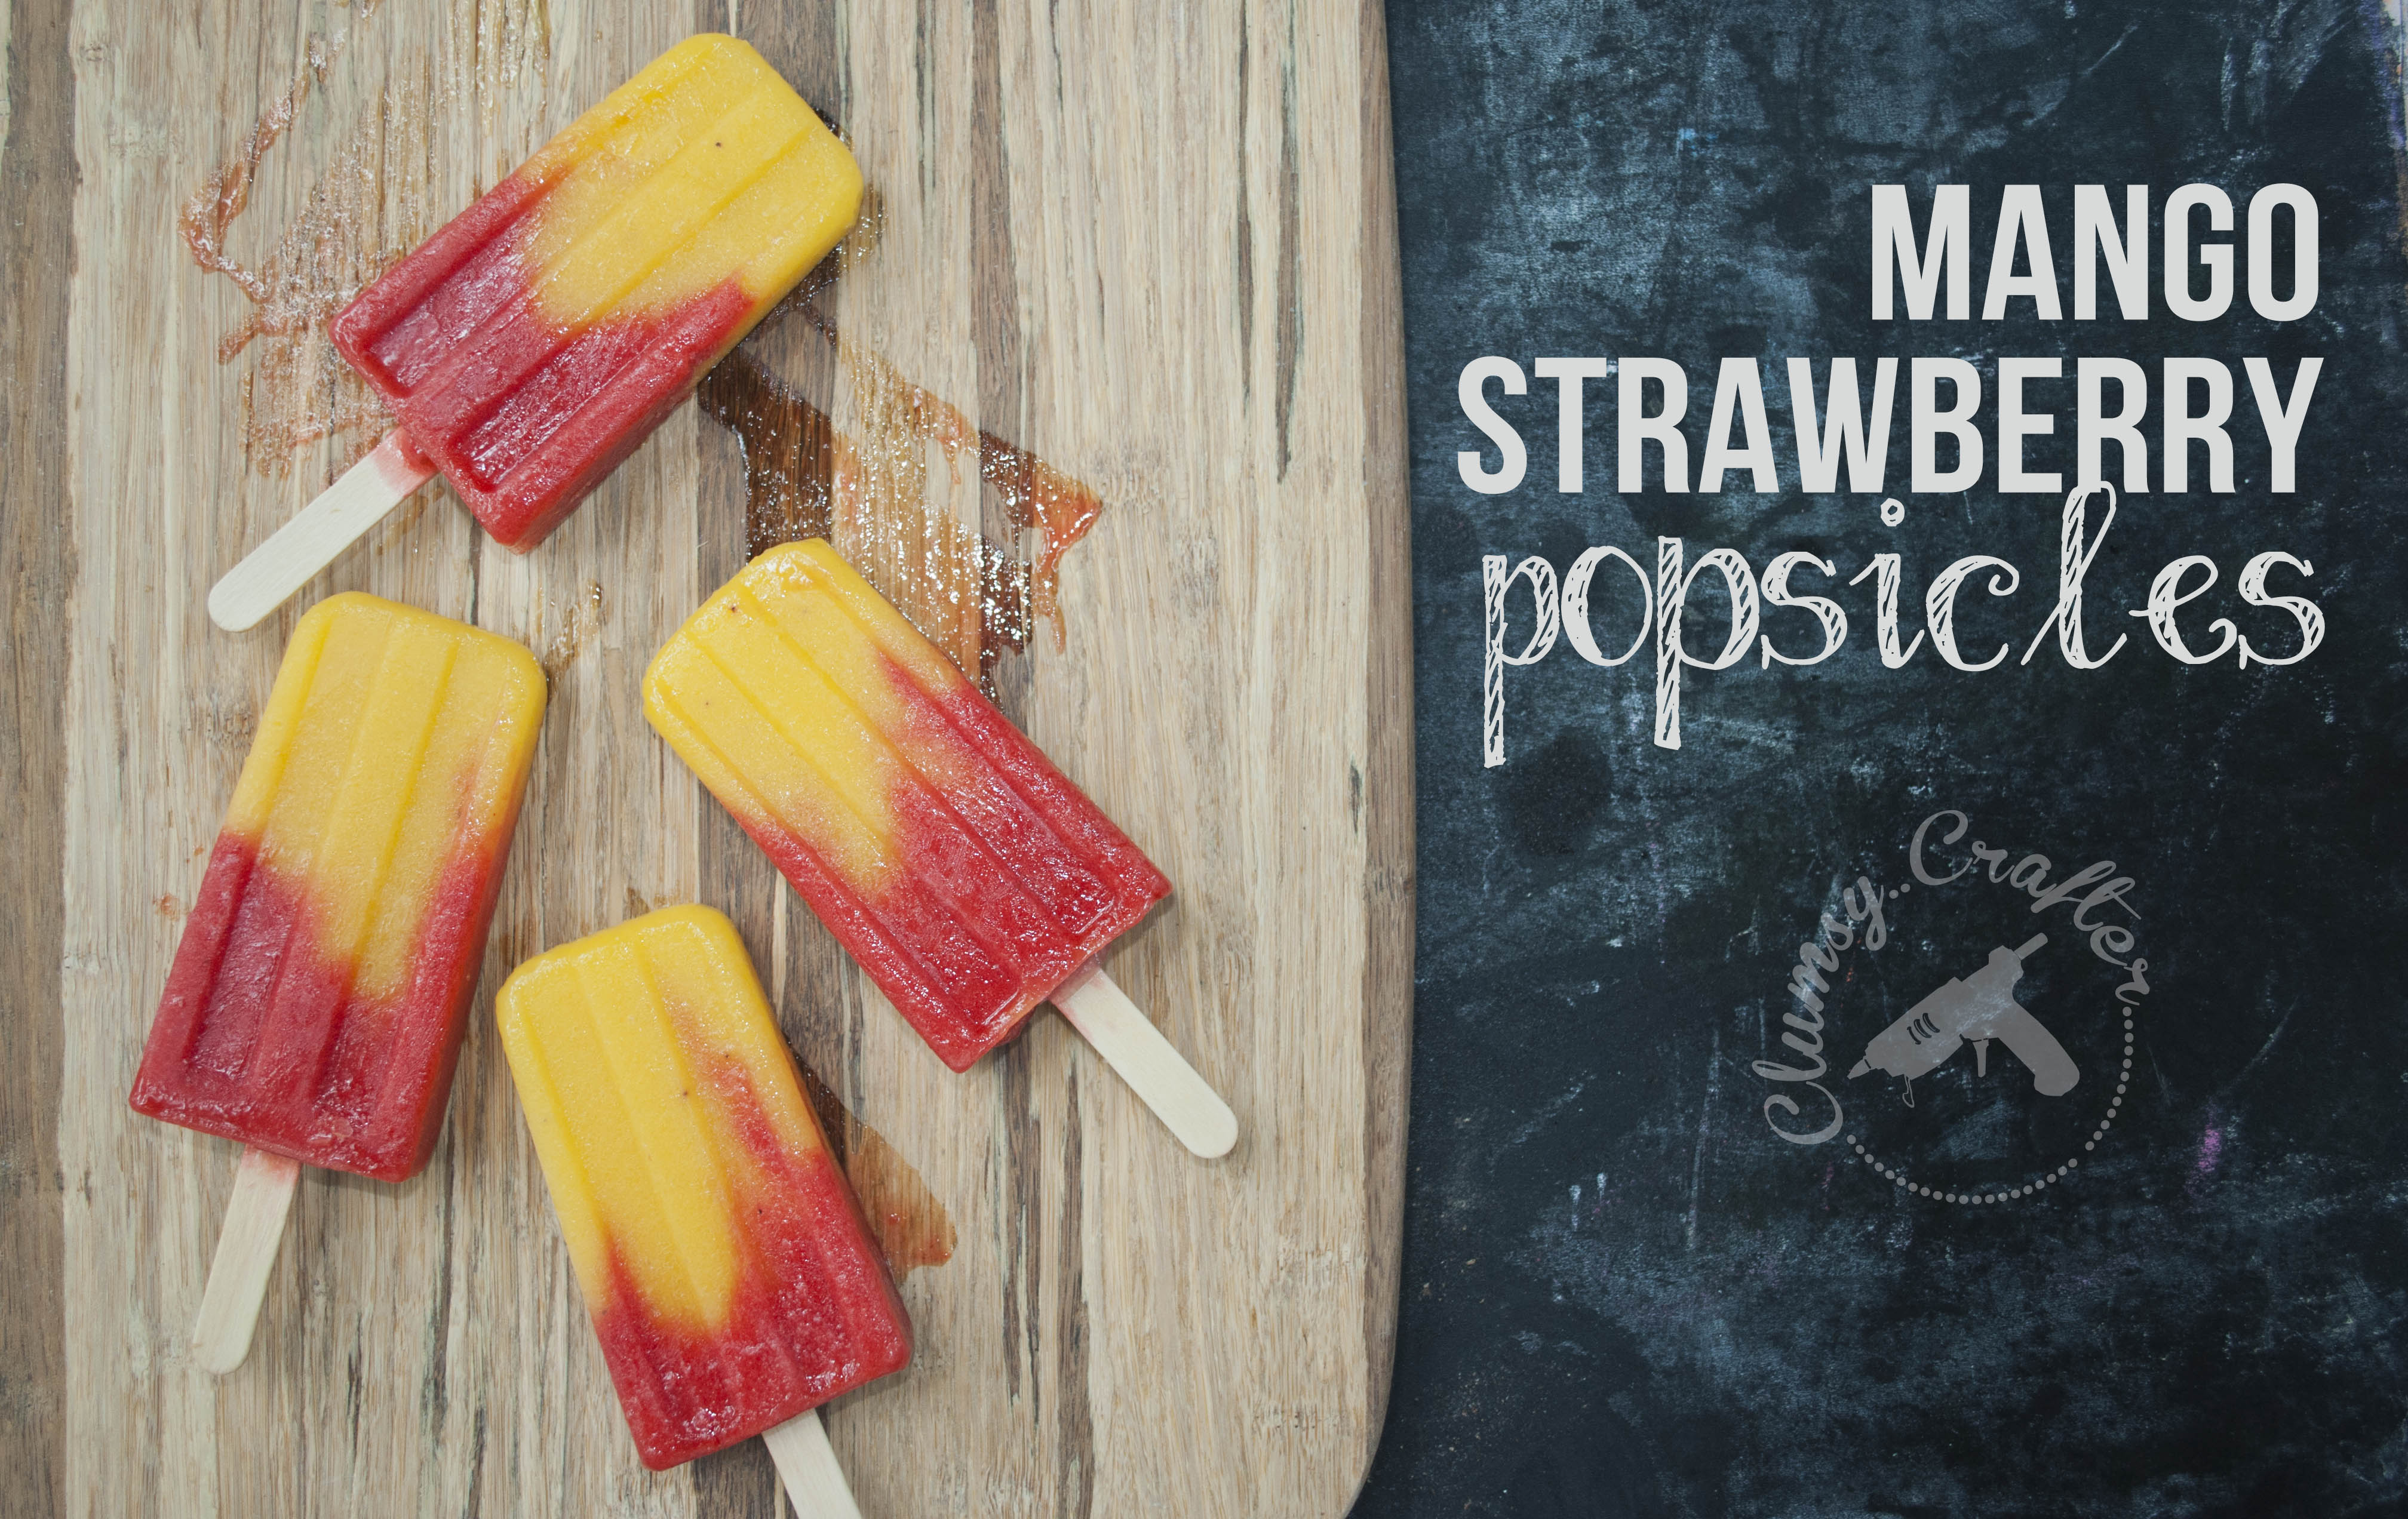 Mango Strawberry popsicle recipe